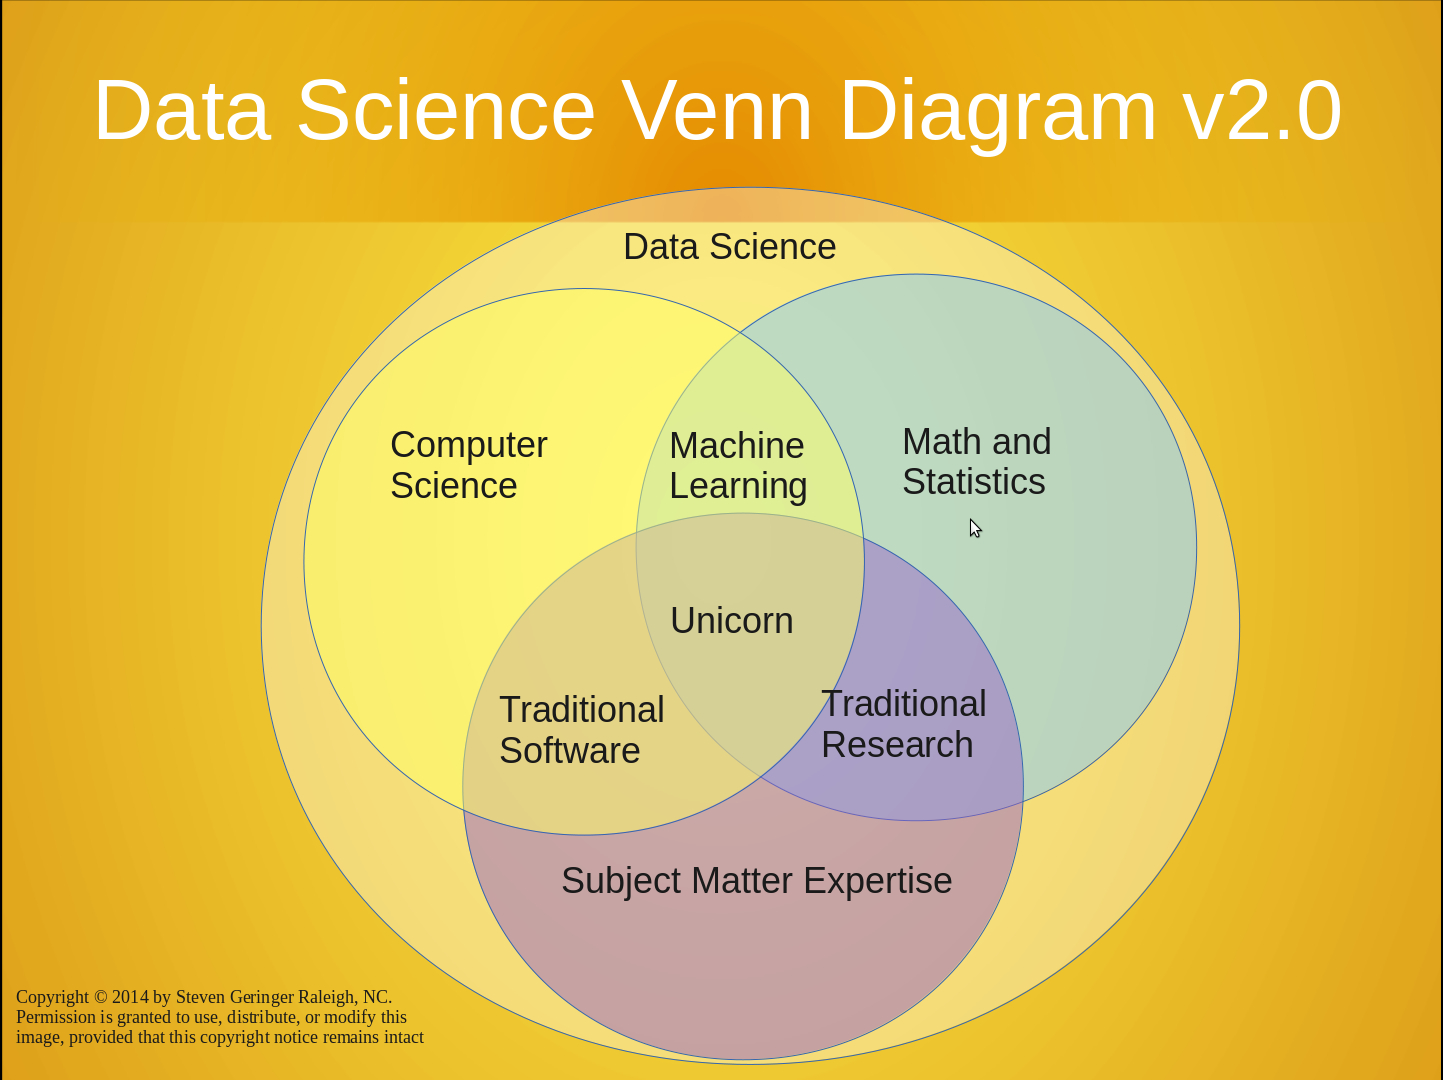 Venn Diagram Definition Battle Of The Data Science Venn Diagrams